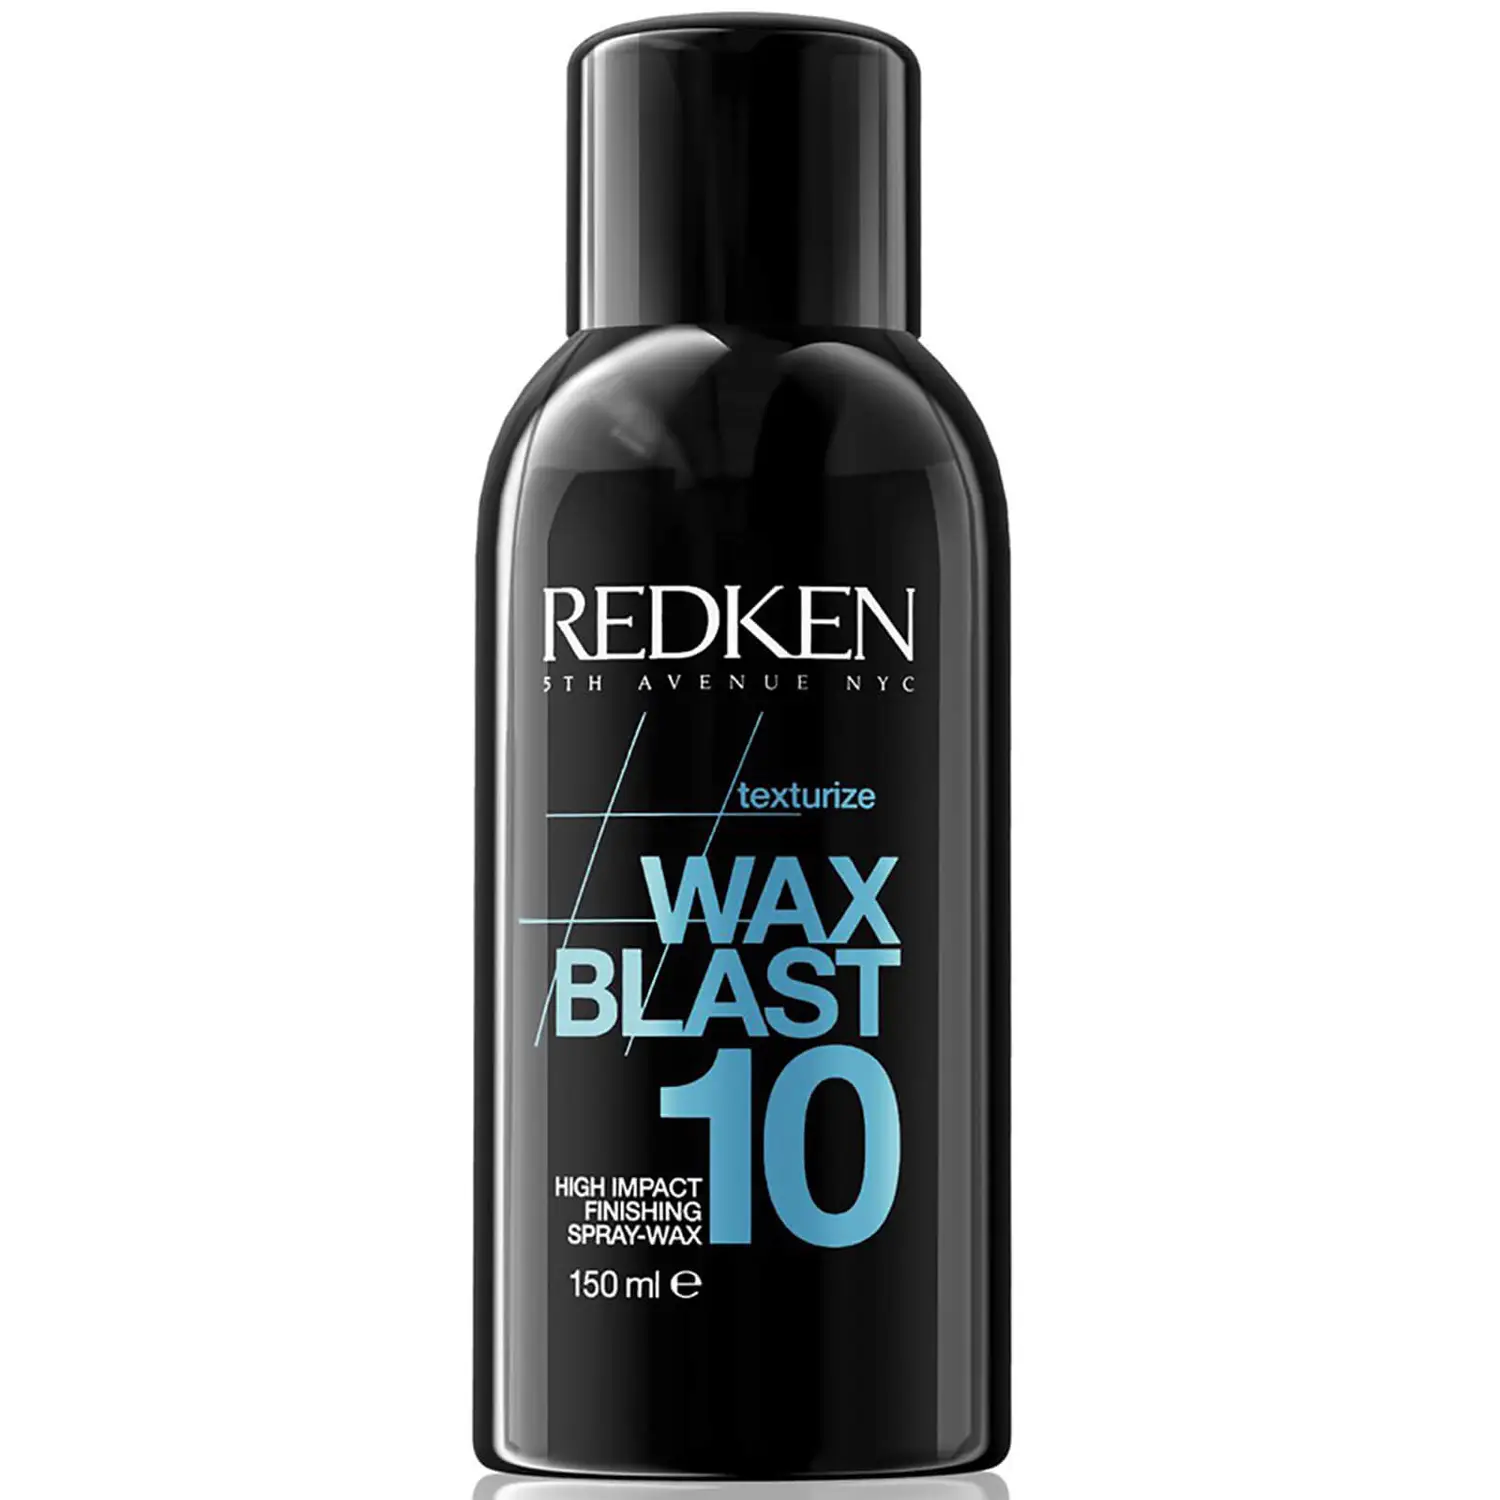 Redken Spray/Wax Blast 10 Finishing Spray 150ml - The Hair Gallery